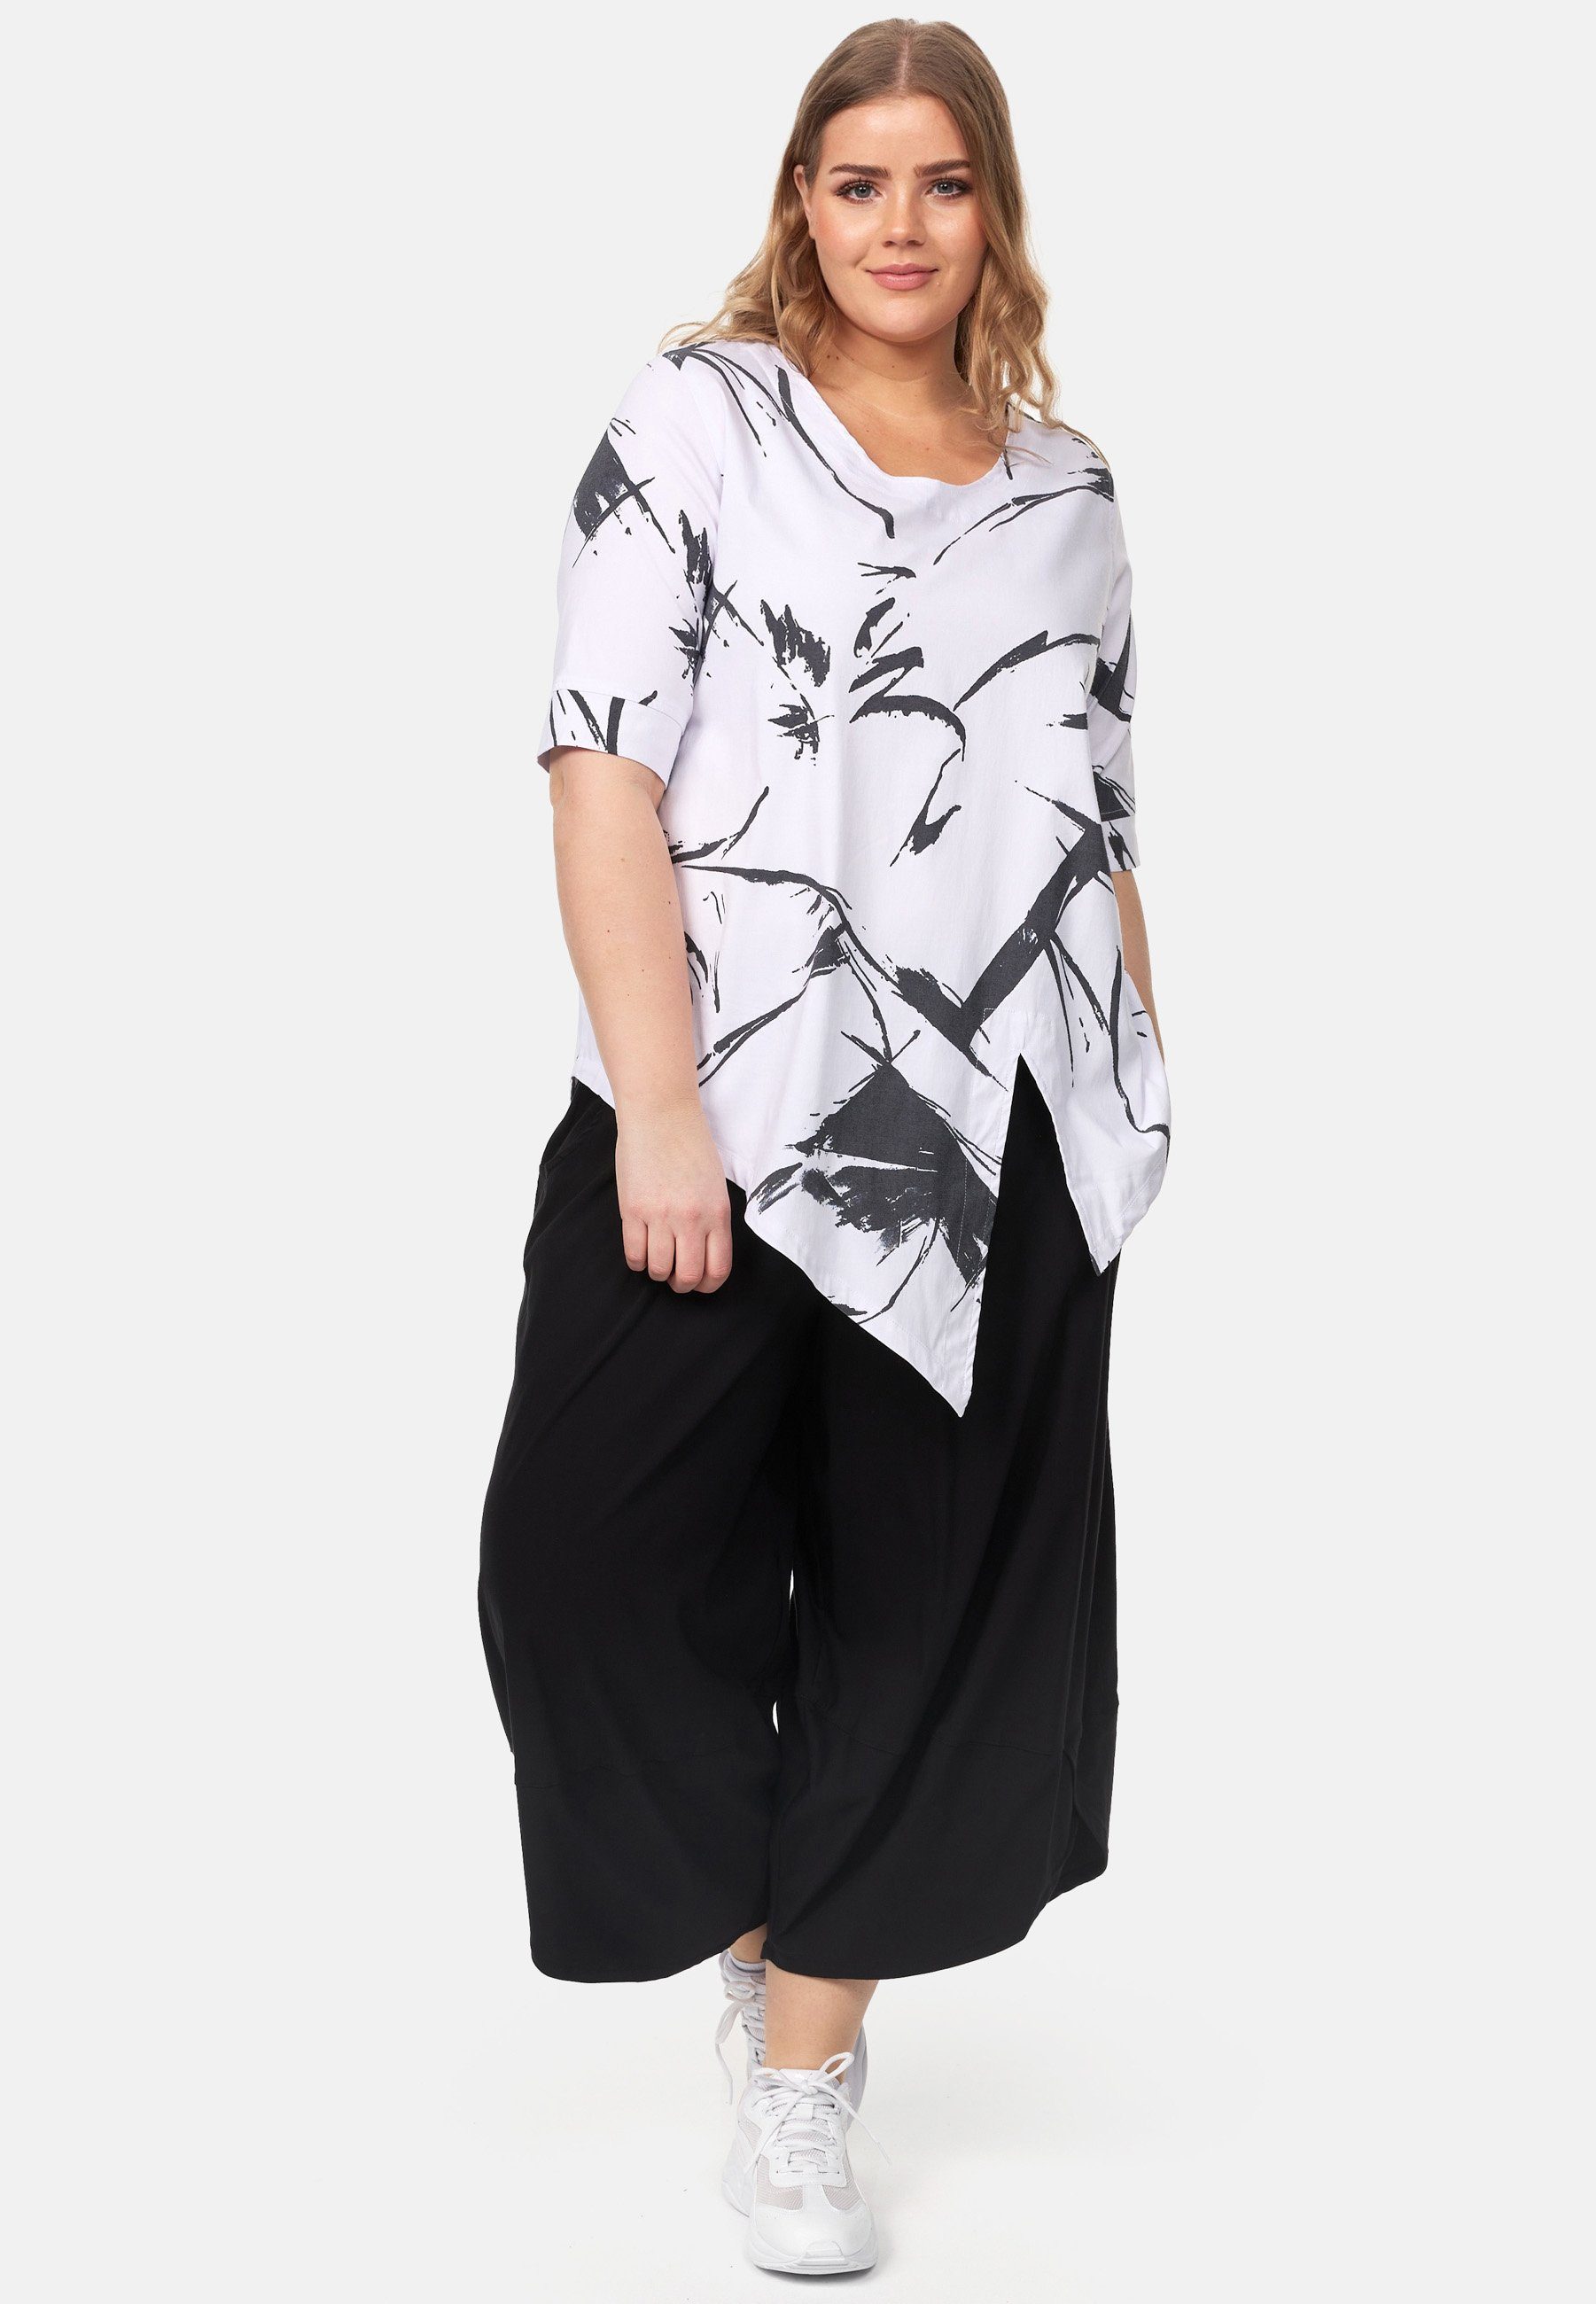 Kekoo Tunikashirt Muster Tunika mit Weiß in 'Flora' Saum A-Line Shirt asymmetrischem